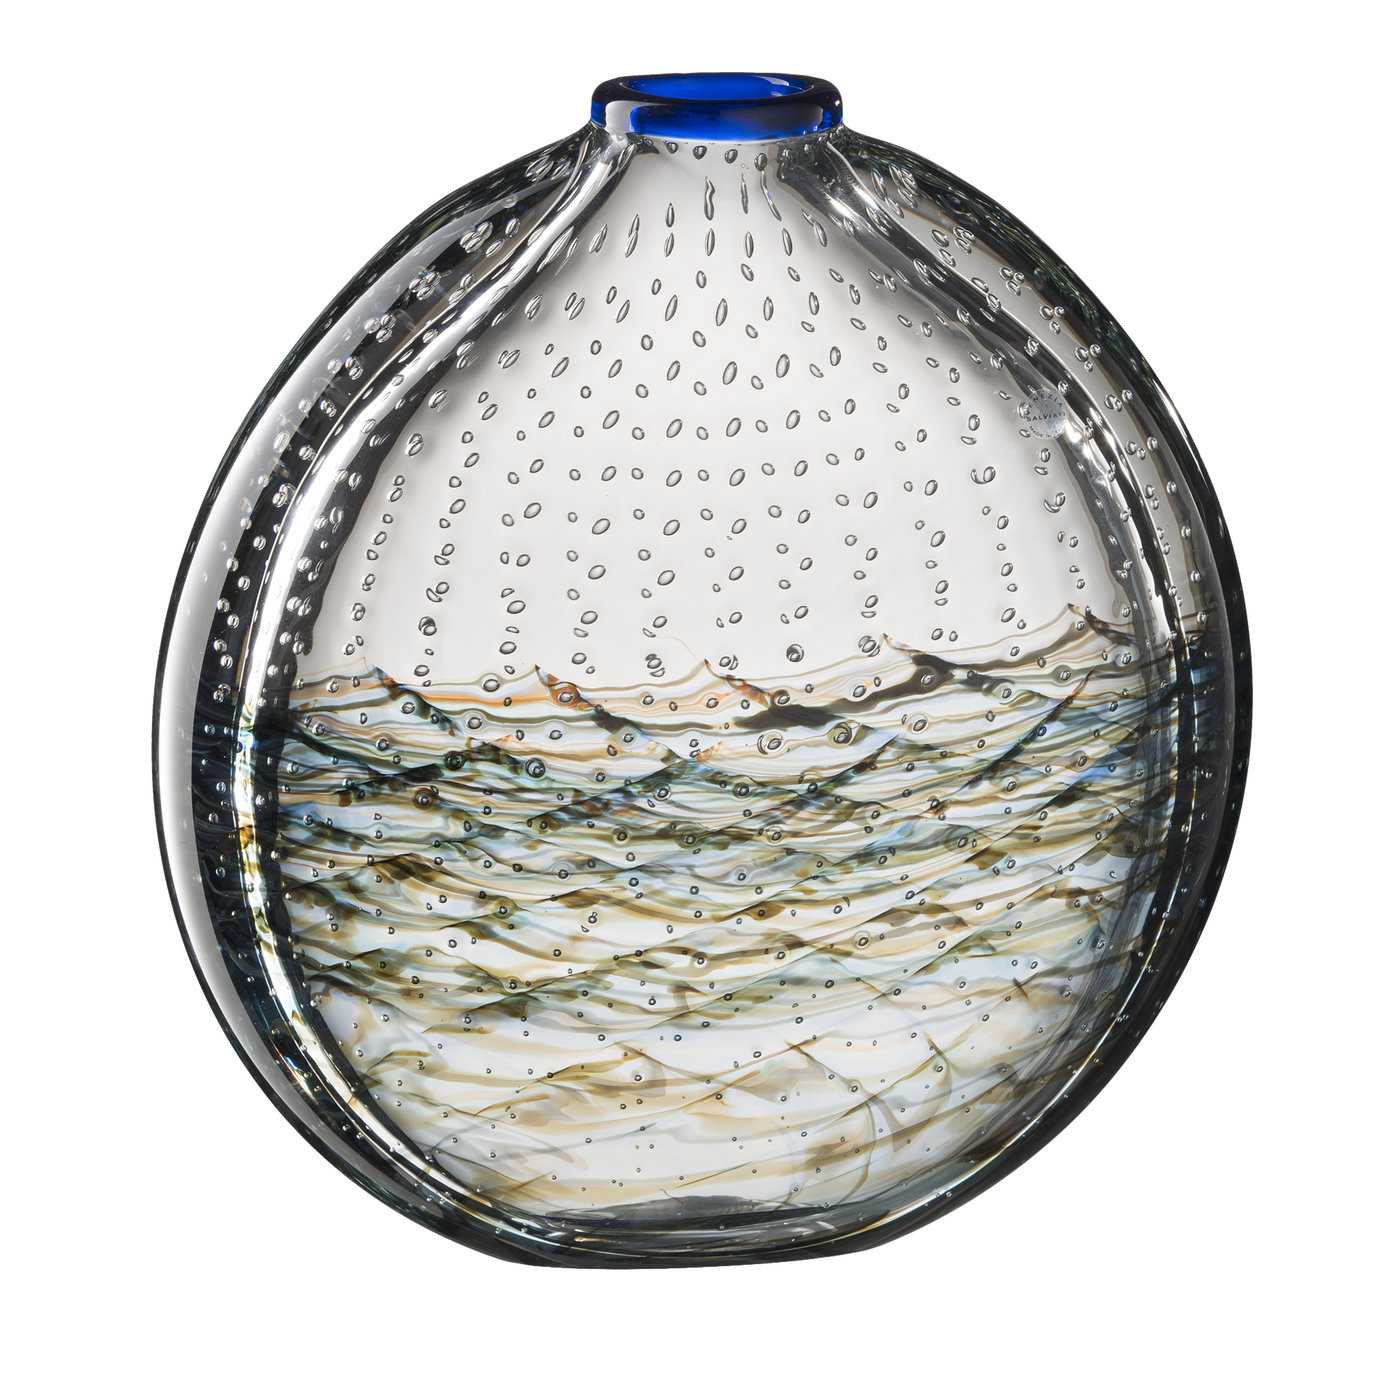 12 Best Clear Fish Bowl Vase 2024 free download clear fish bowl vase of lungomare vase by berit johansson shop salviati online at artemest throughout saltve 01620180601 1729 1k40nio